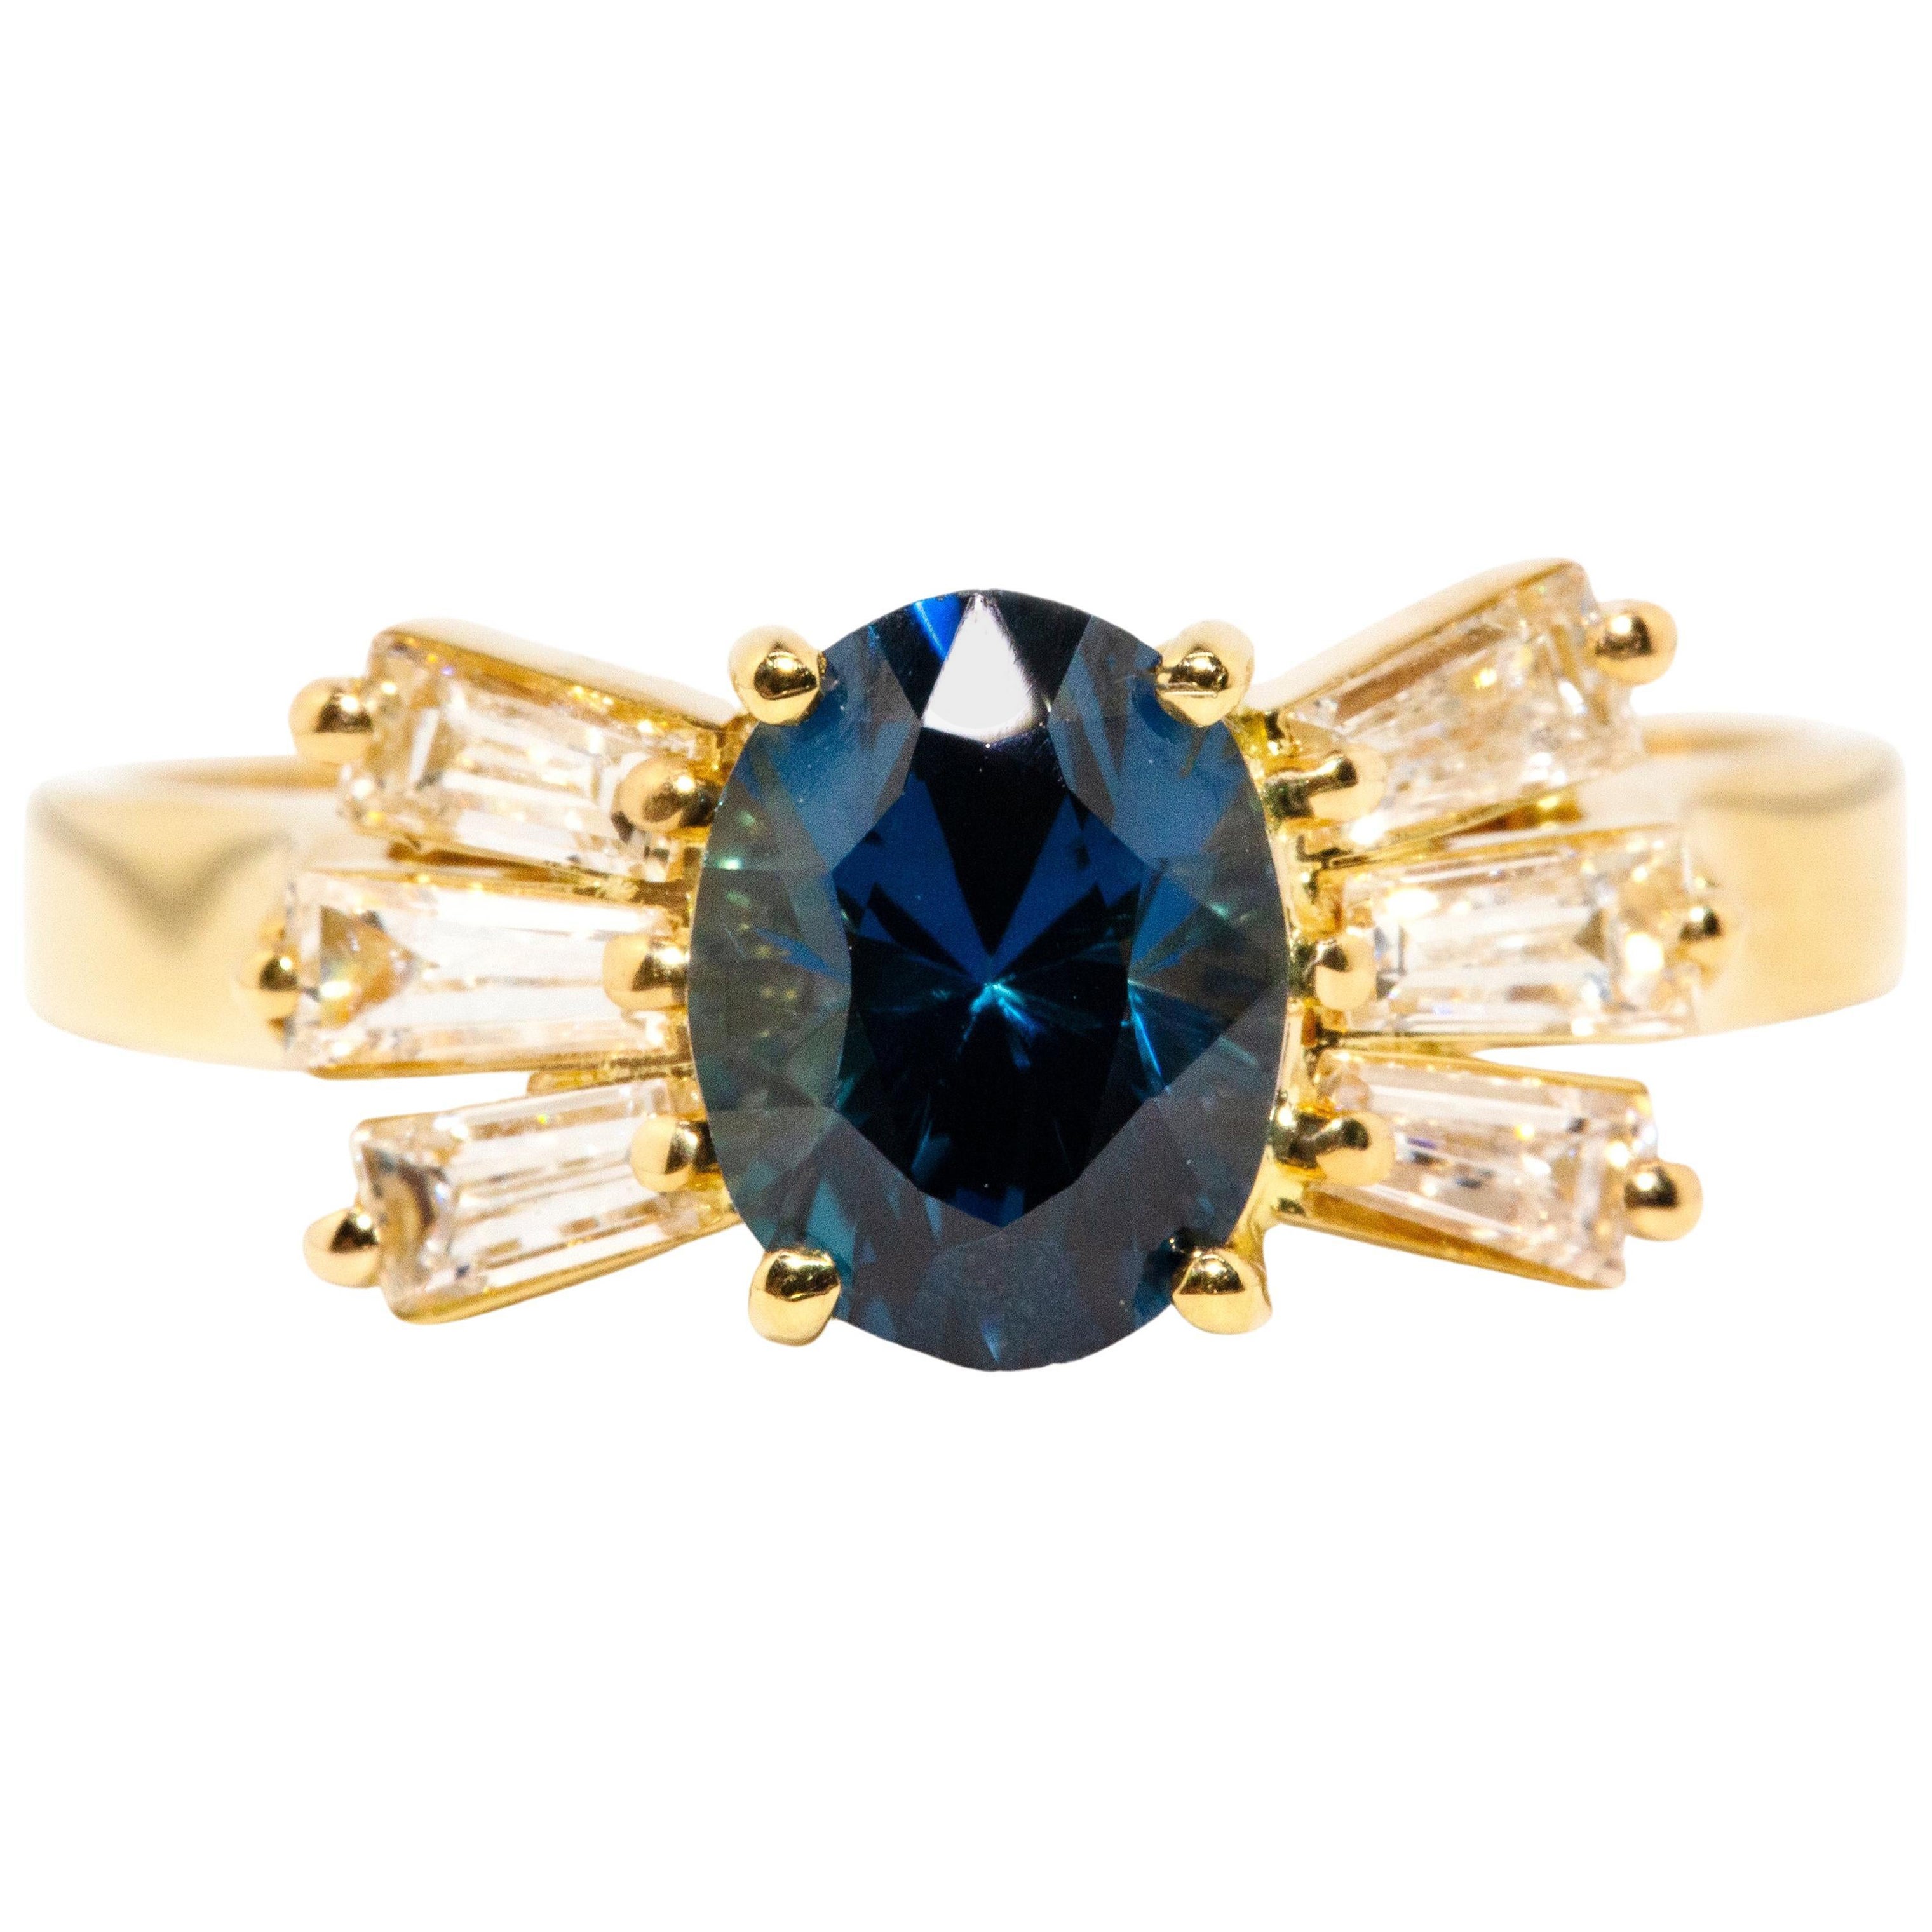 Vintage Circa 1980s 1.78 Carat Sapphire & Baguette Diamond Ring 18ct Yellow Gold